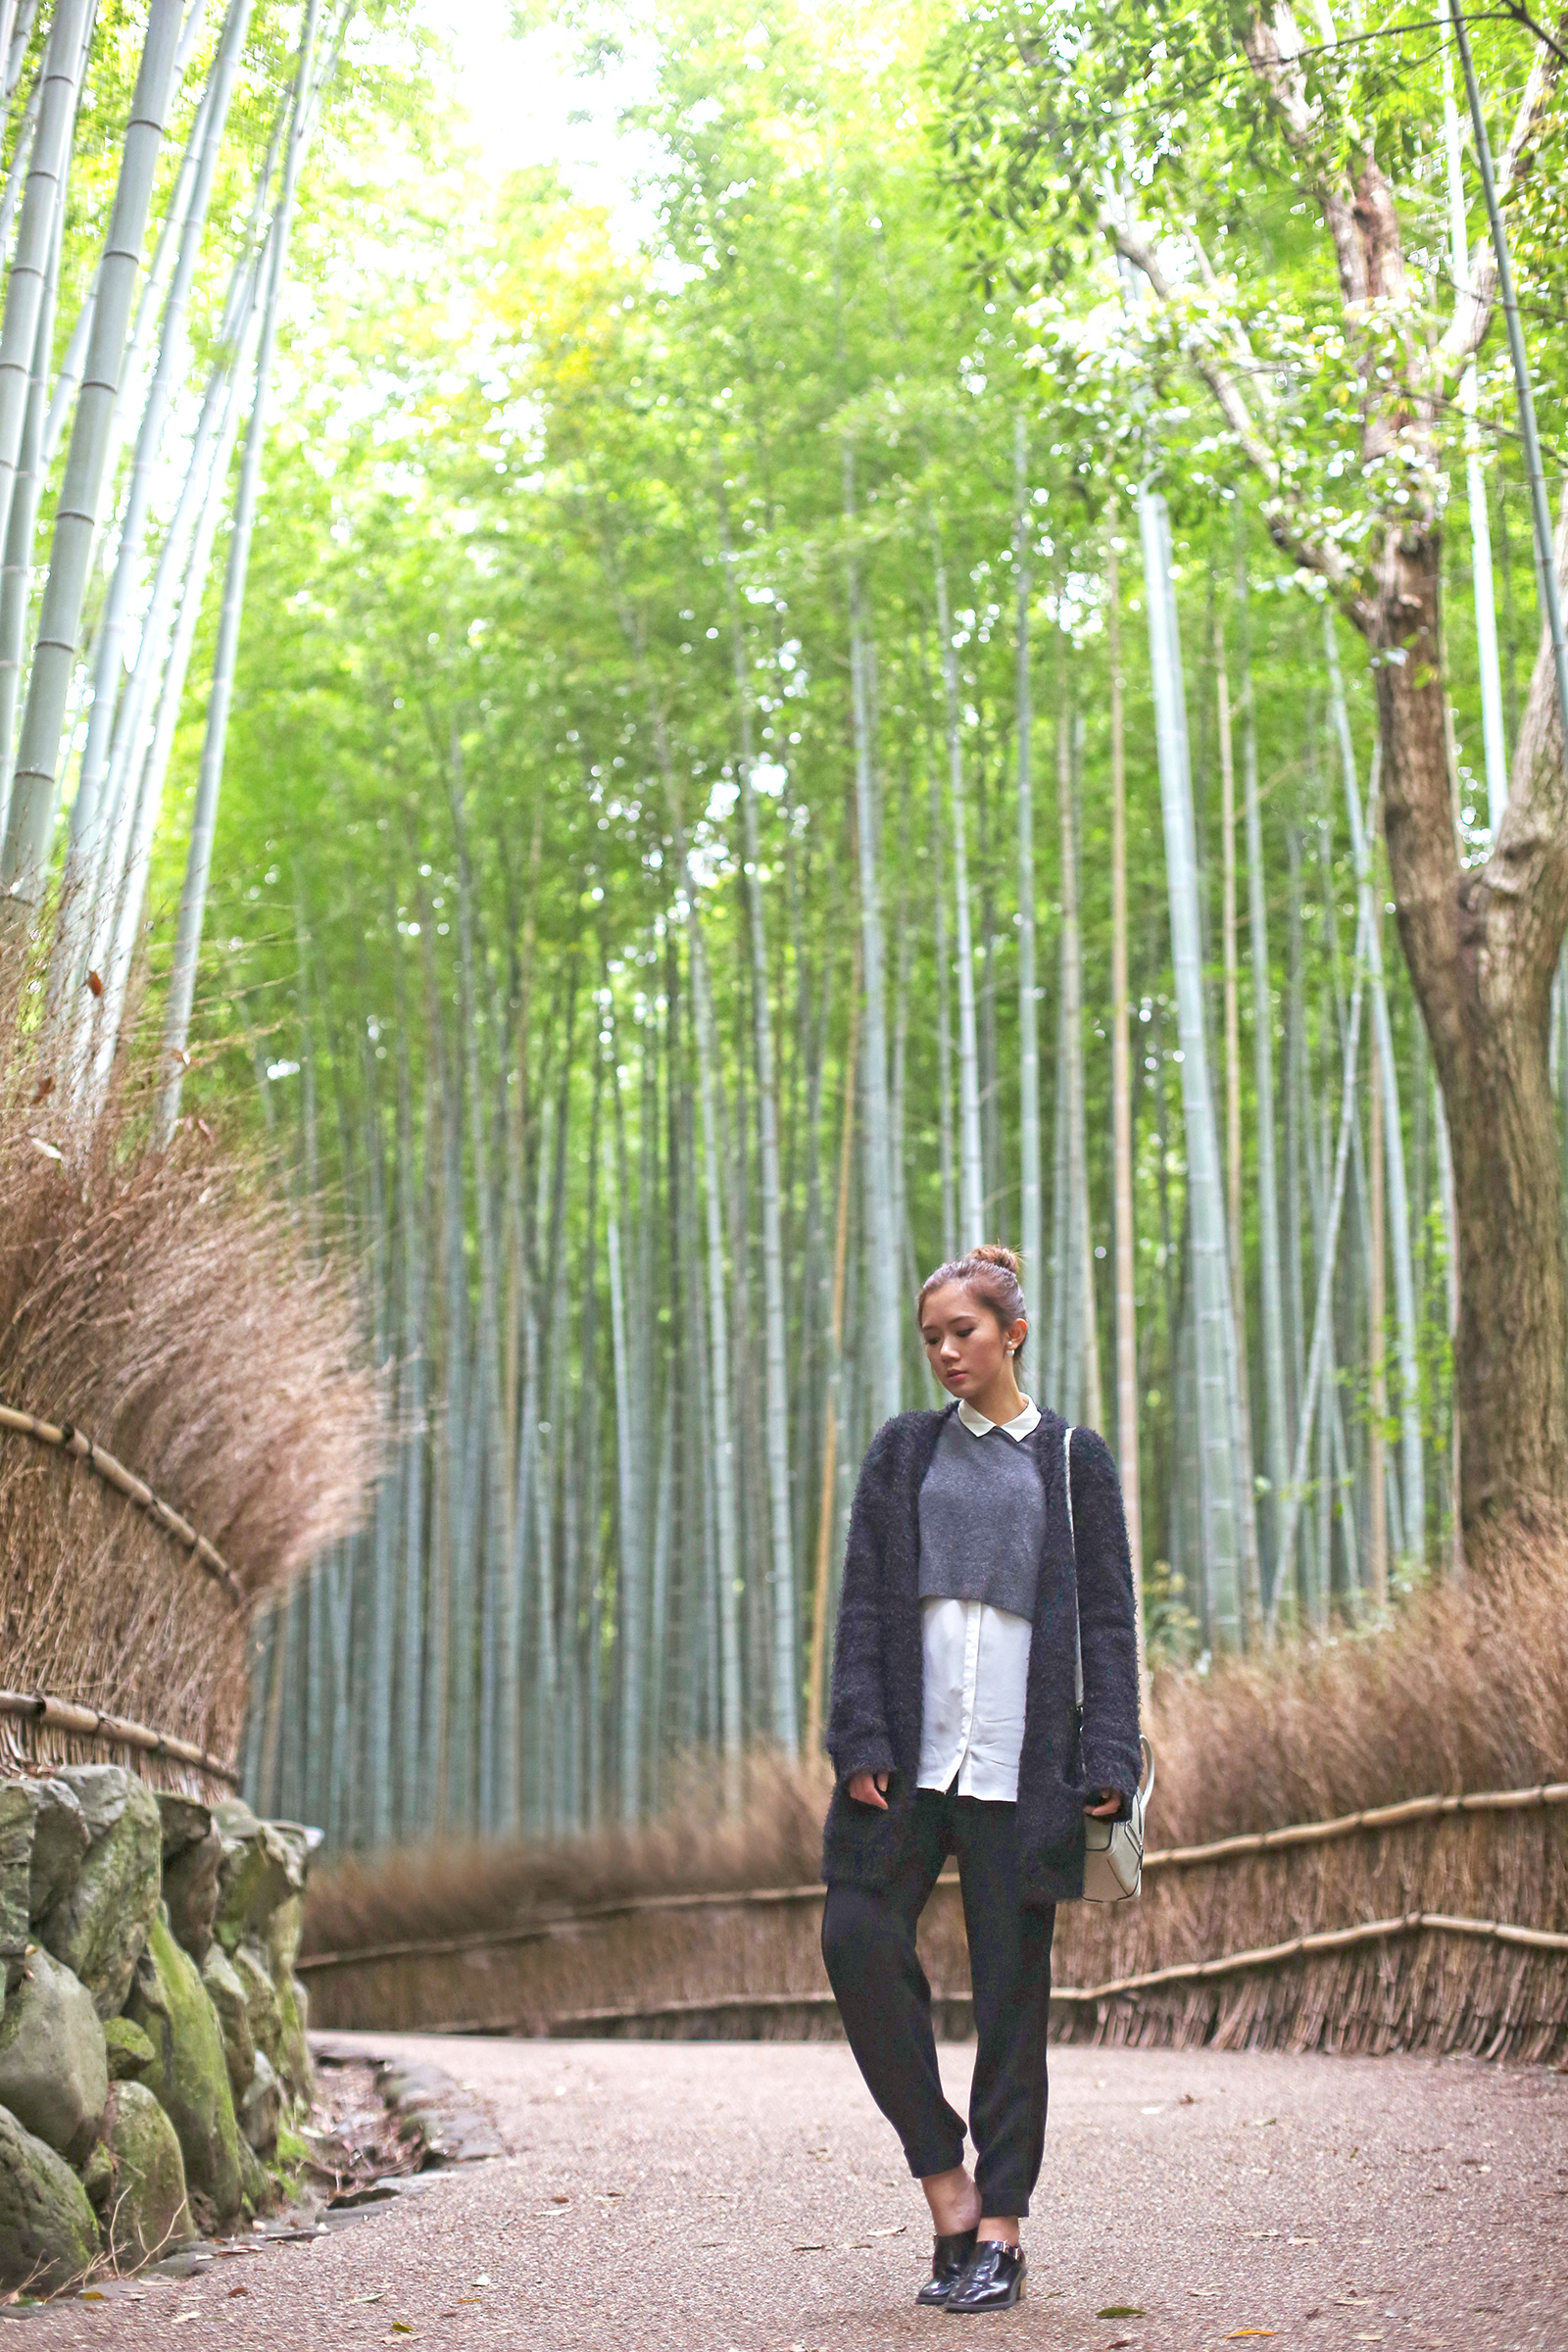 Arashimaya Bamboo Grove - www.itscamilleco.com